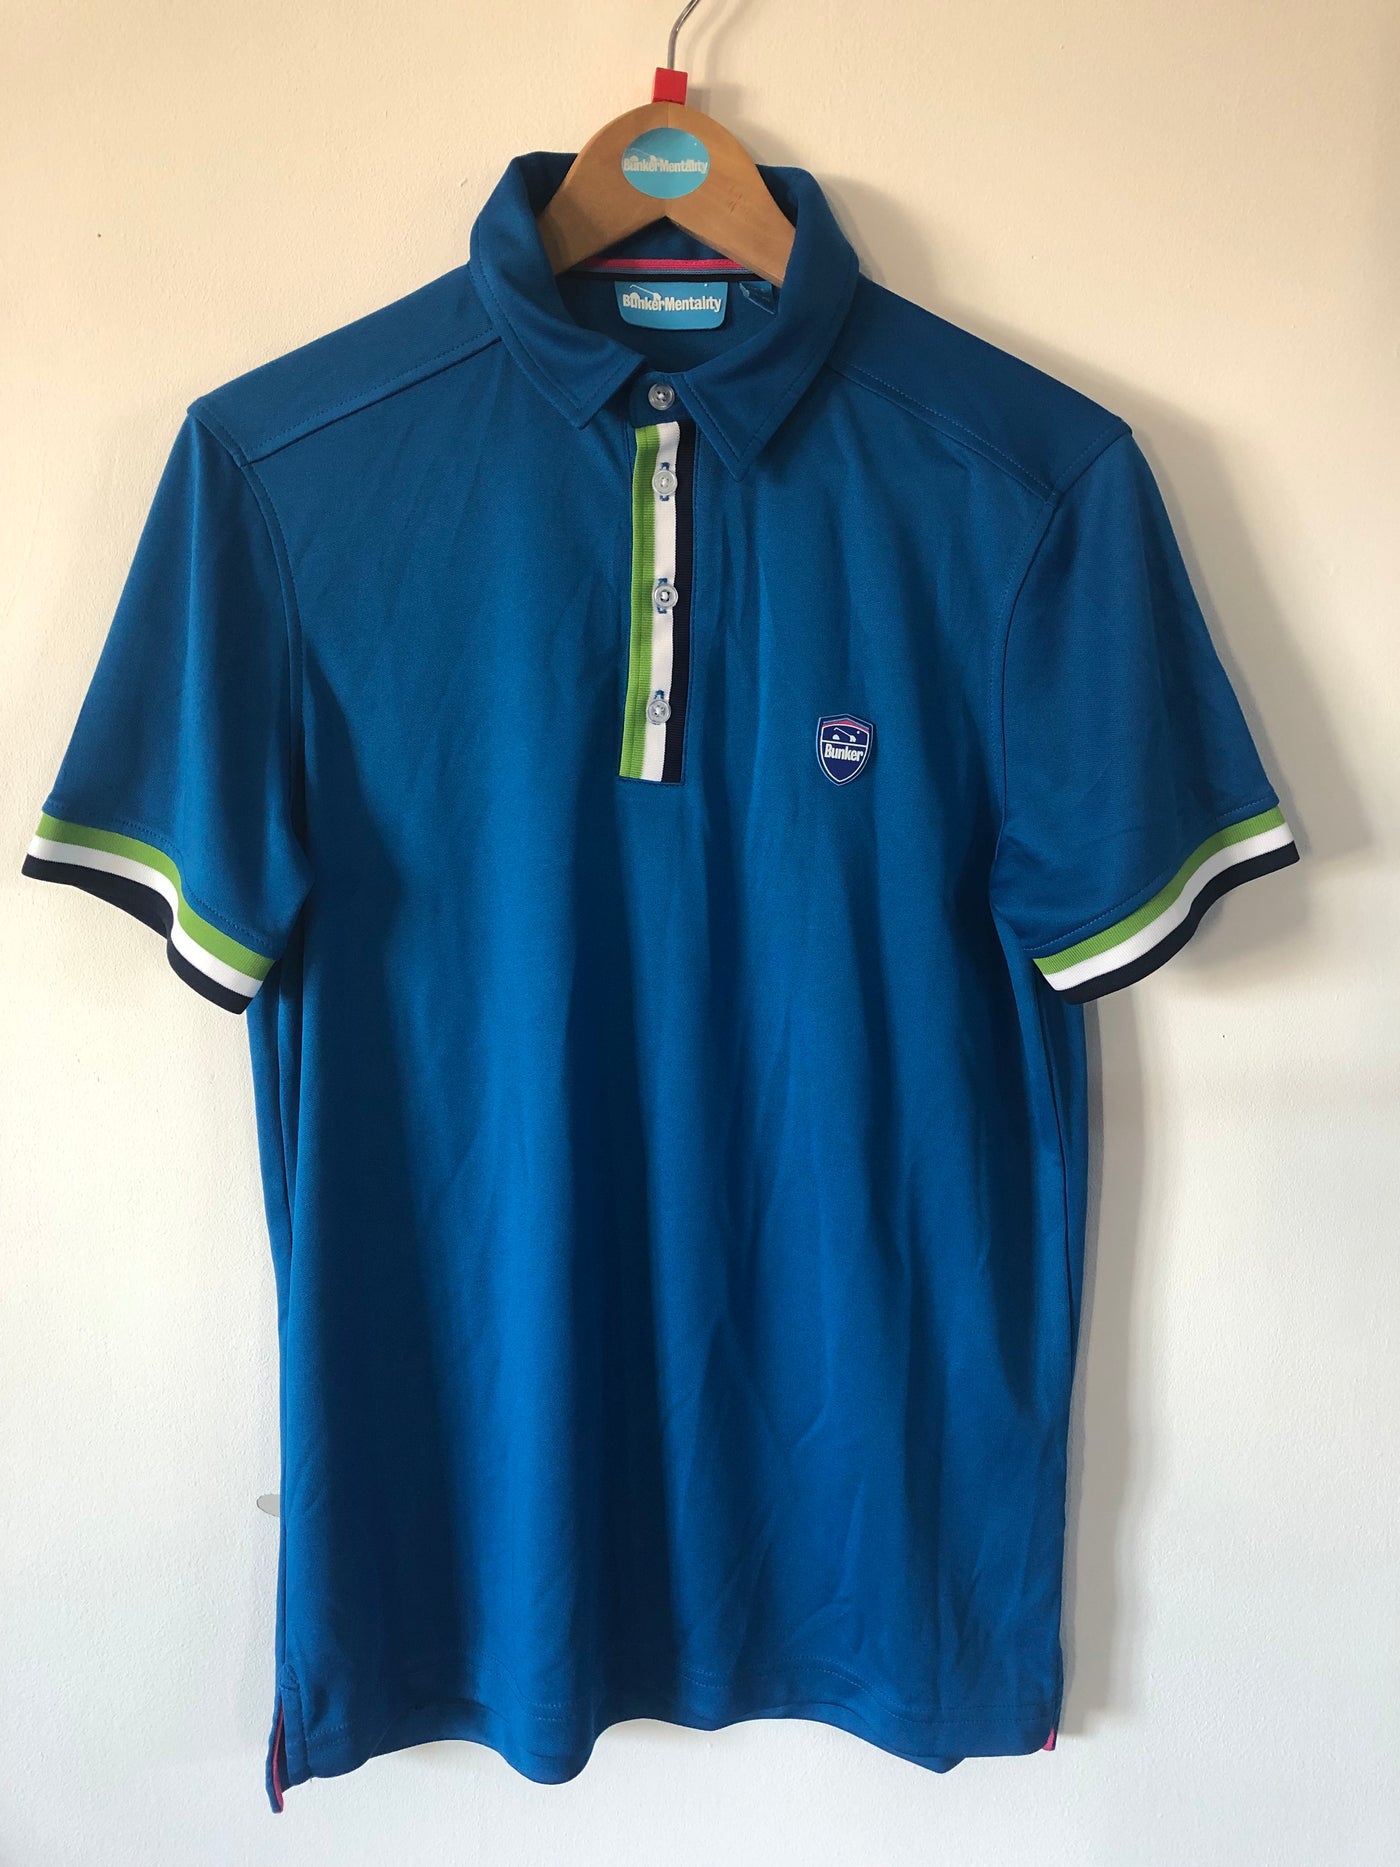 CMAX Tri Stripe Polyester Polo Shirt - Royal Blue - Small (sample)